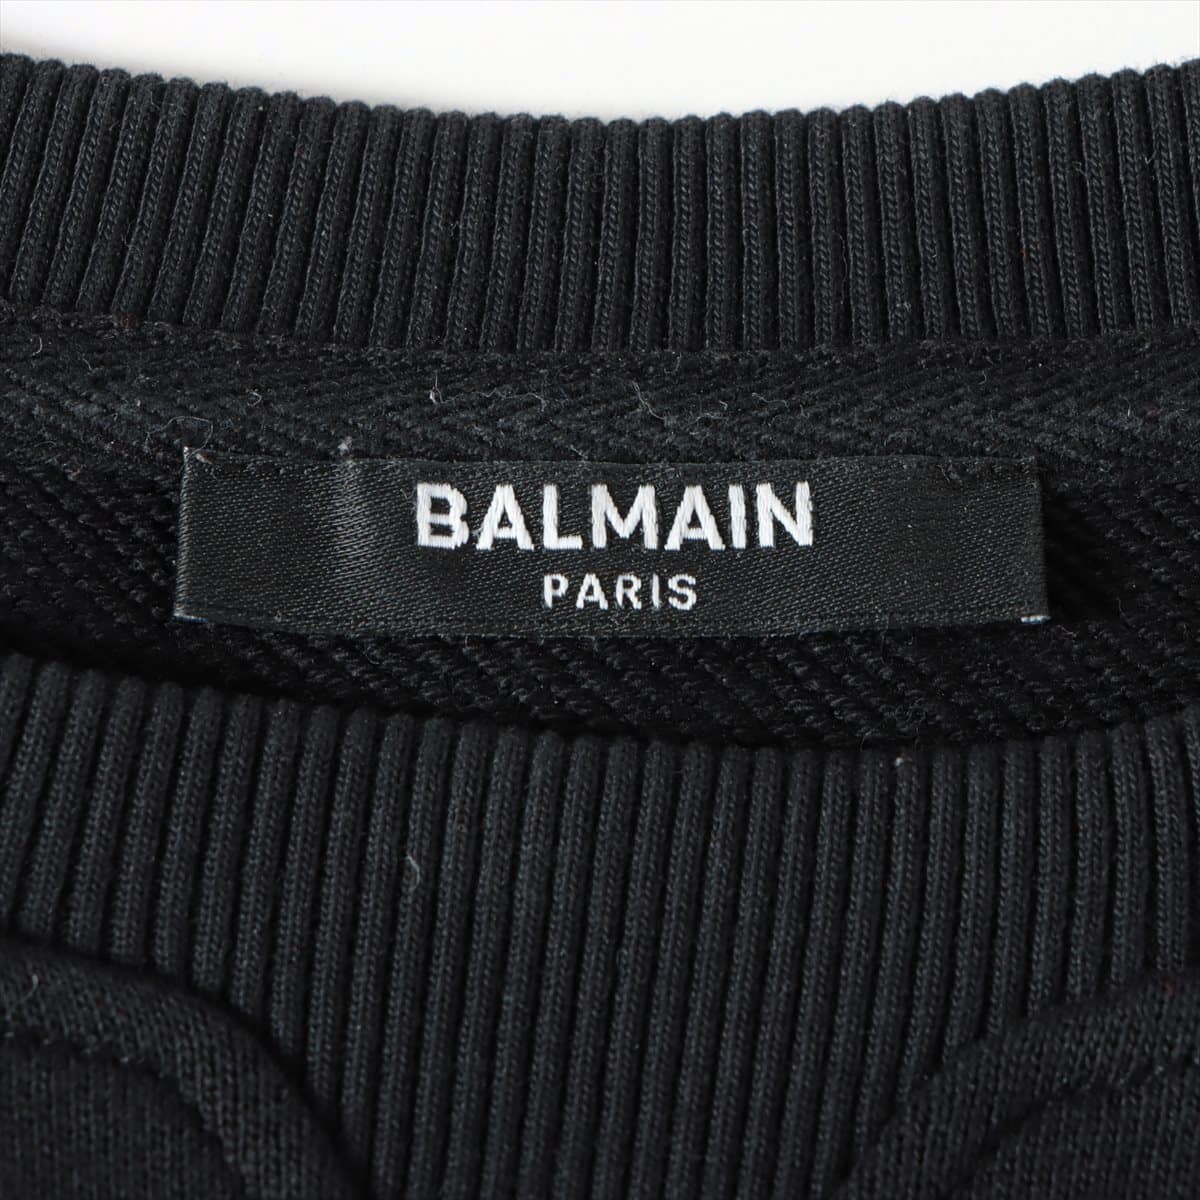 Balmain Cotton Basic knitted fabric 14A Kids Black  Logo